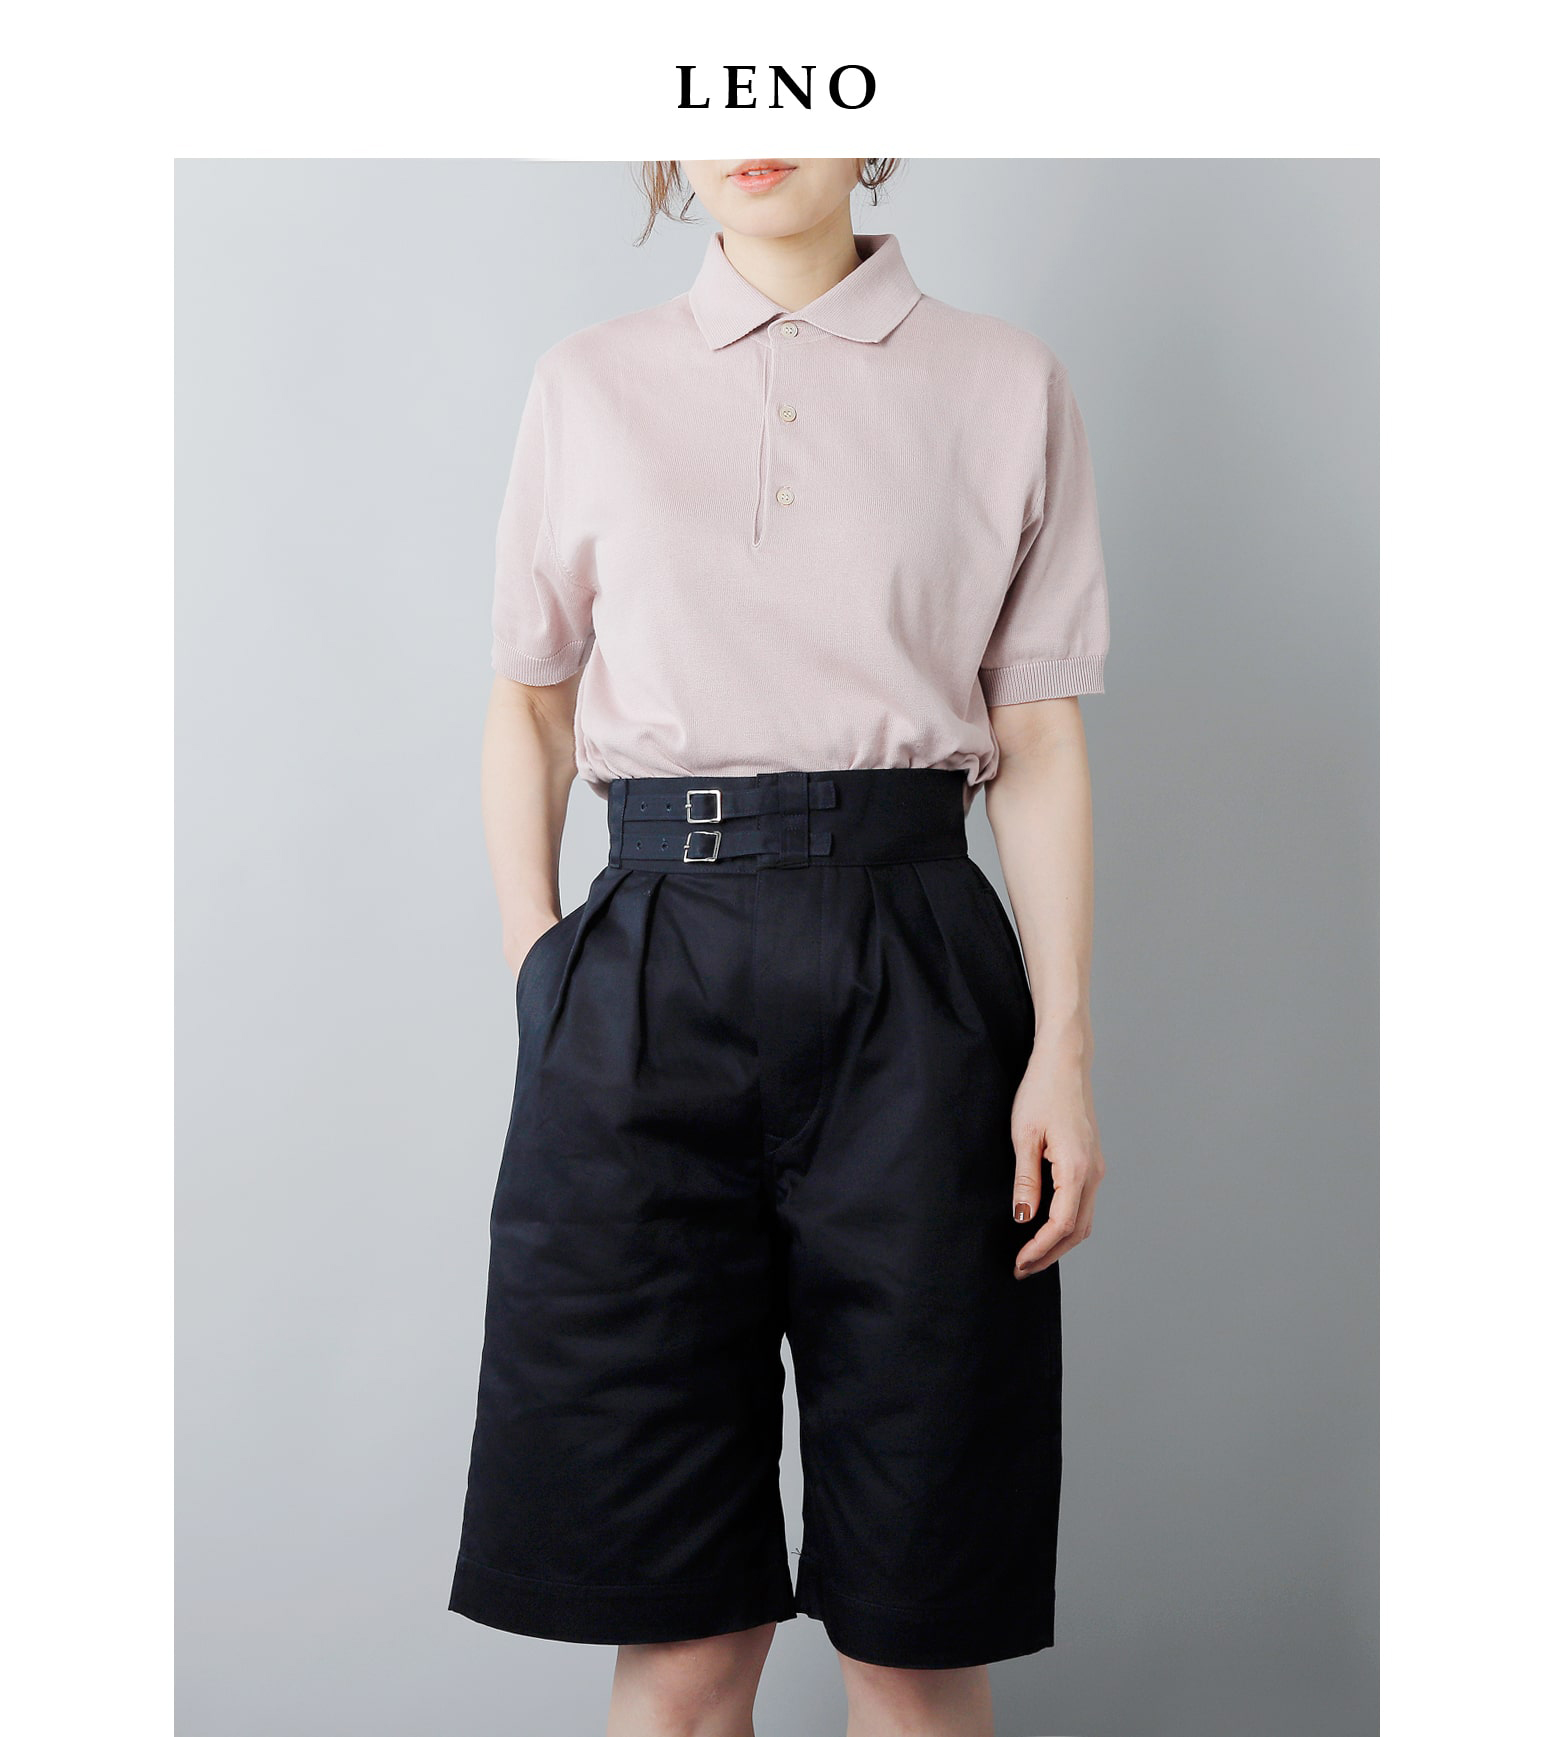 LENO(リノ)グルカショートトラウザーズ”Gurkha Short Trousers” leno-pt002☆5